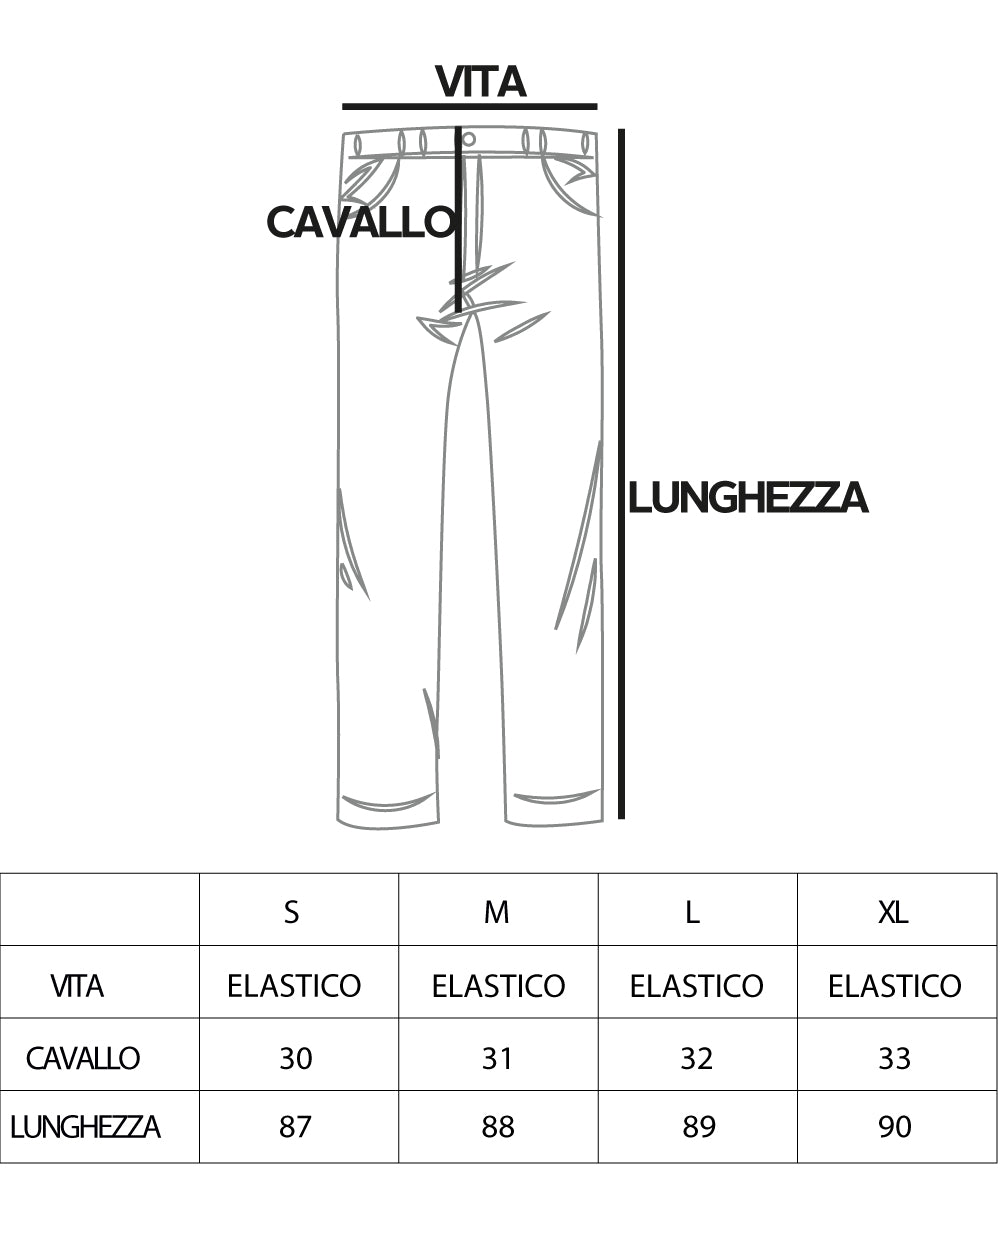 Pantaloni Jeans Uomo Regular Fit Denim Basic Pantalaccio Taglio al Ginocchio Casual GIOSAL-P5523A